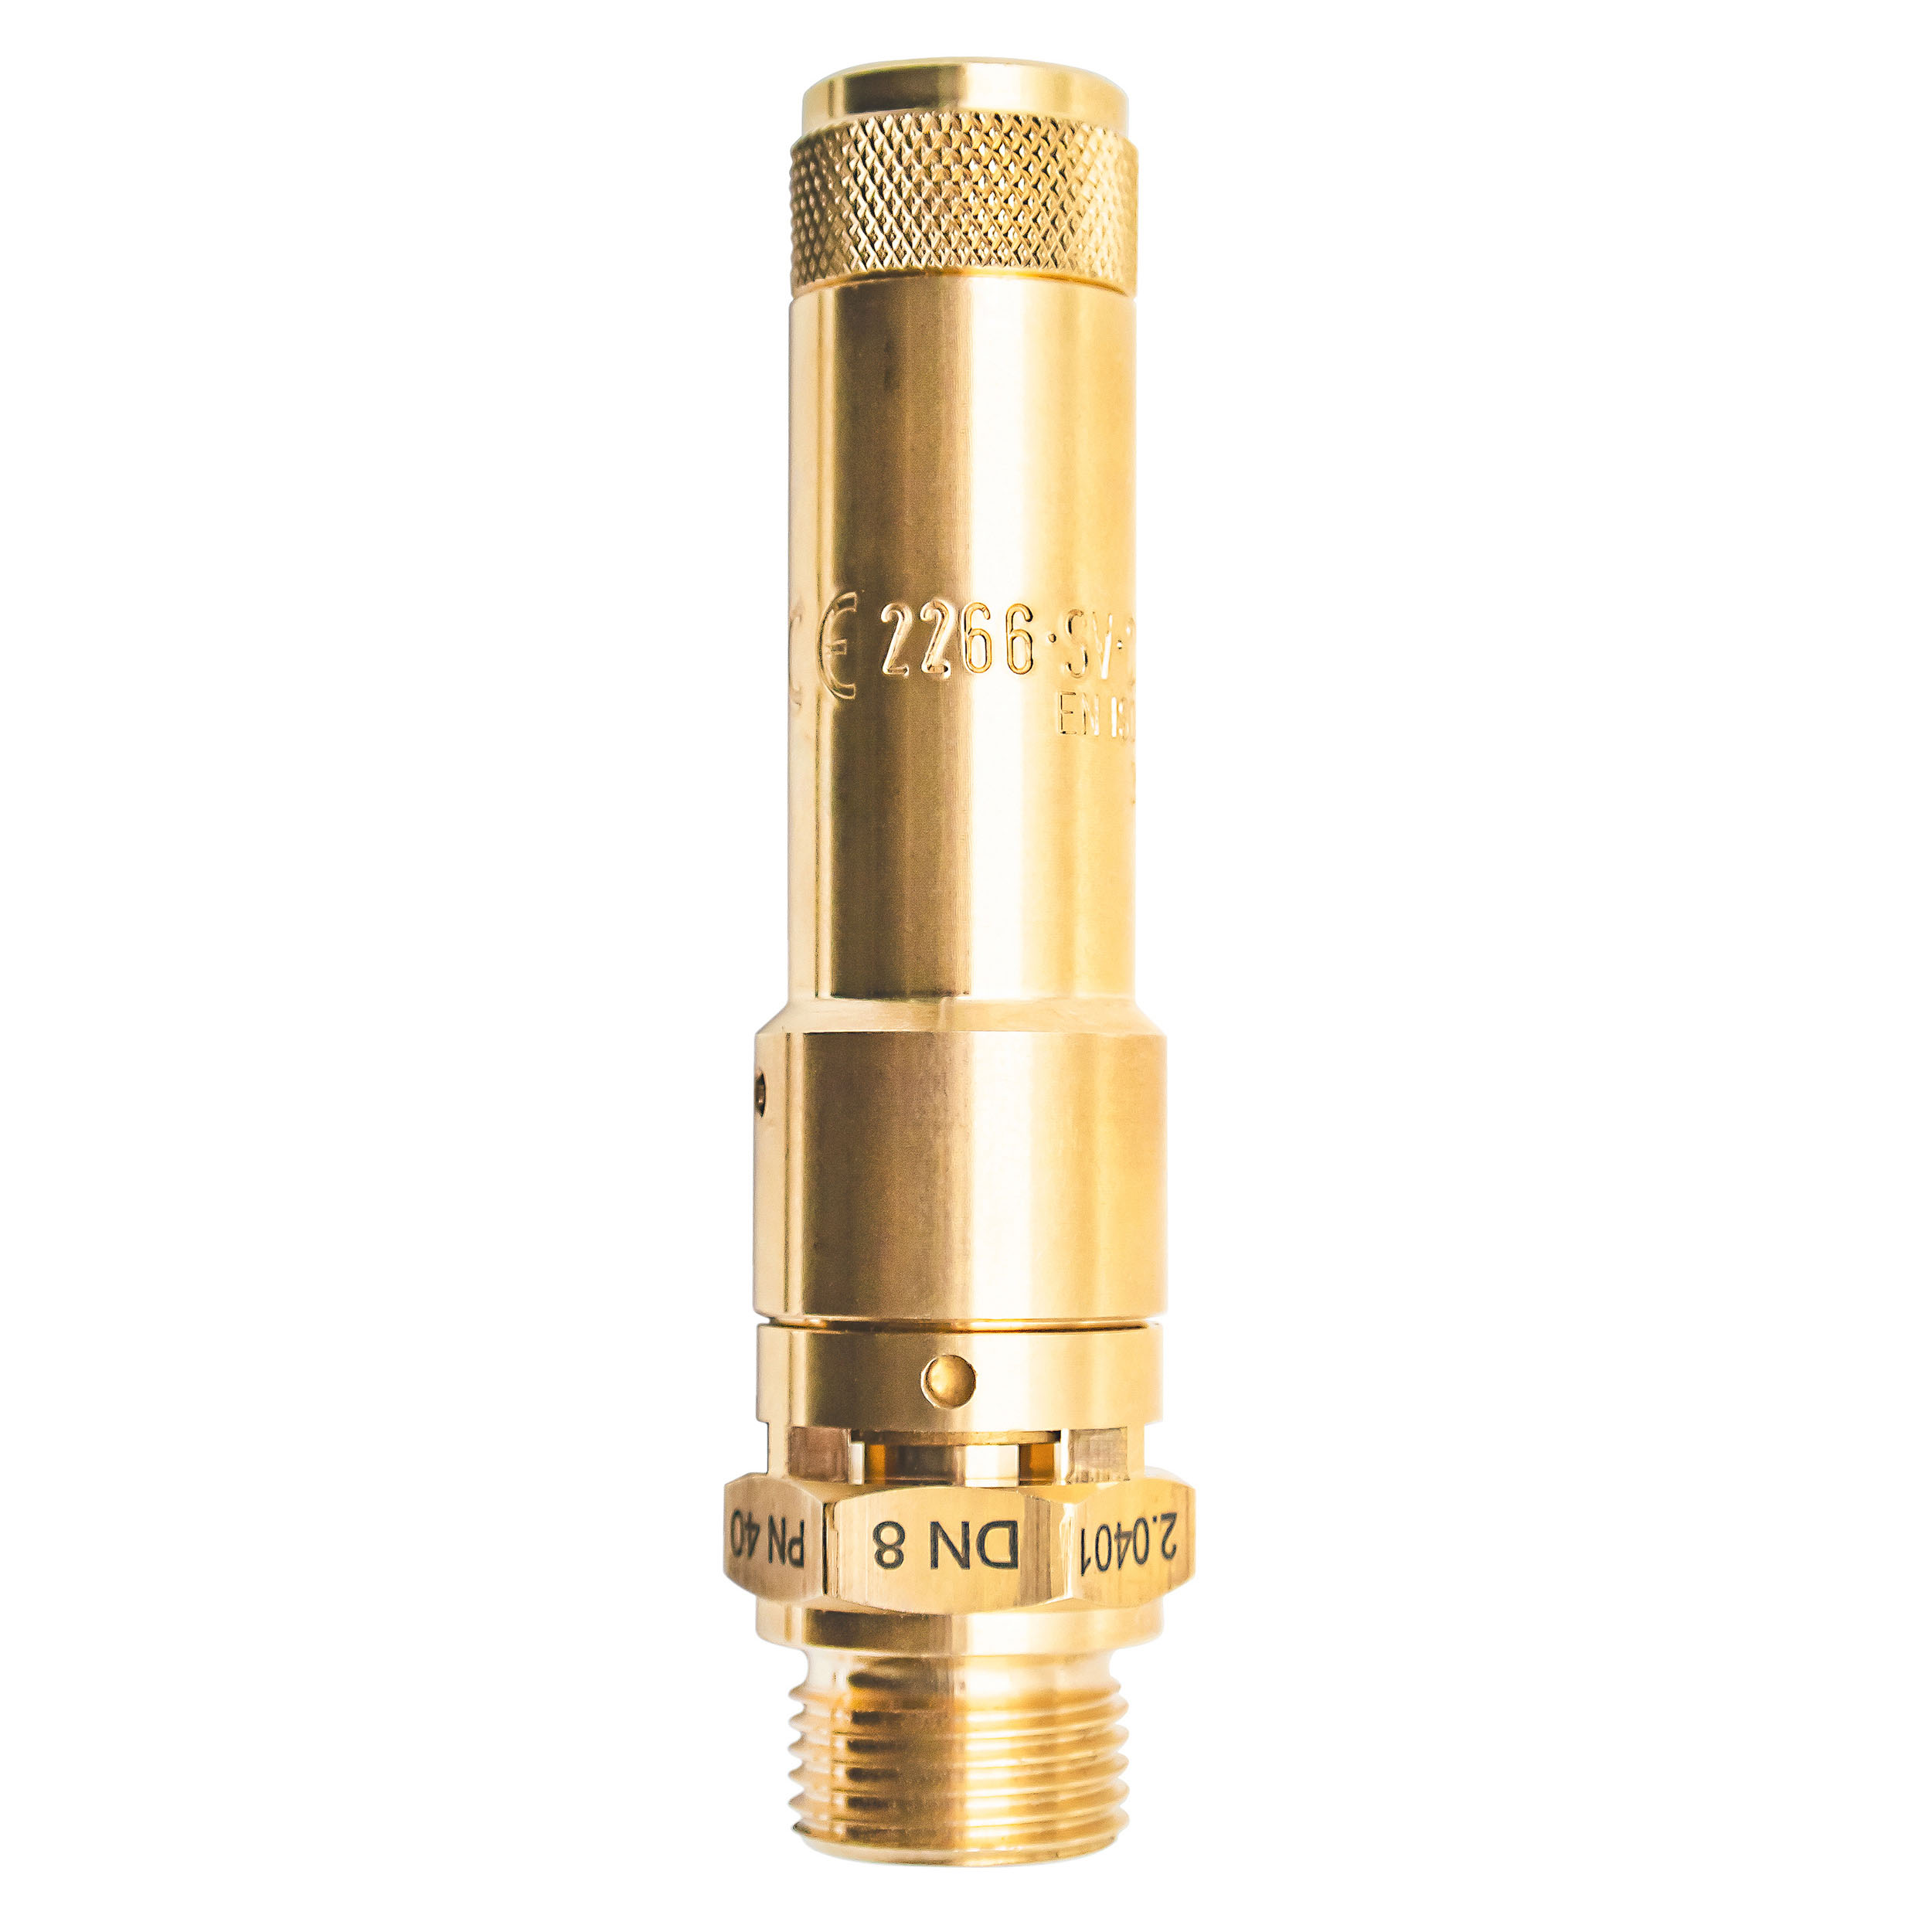 Component-tested safety valve DN 8, G¼, pressure: 15.1-20 bar